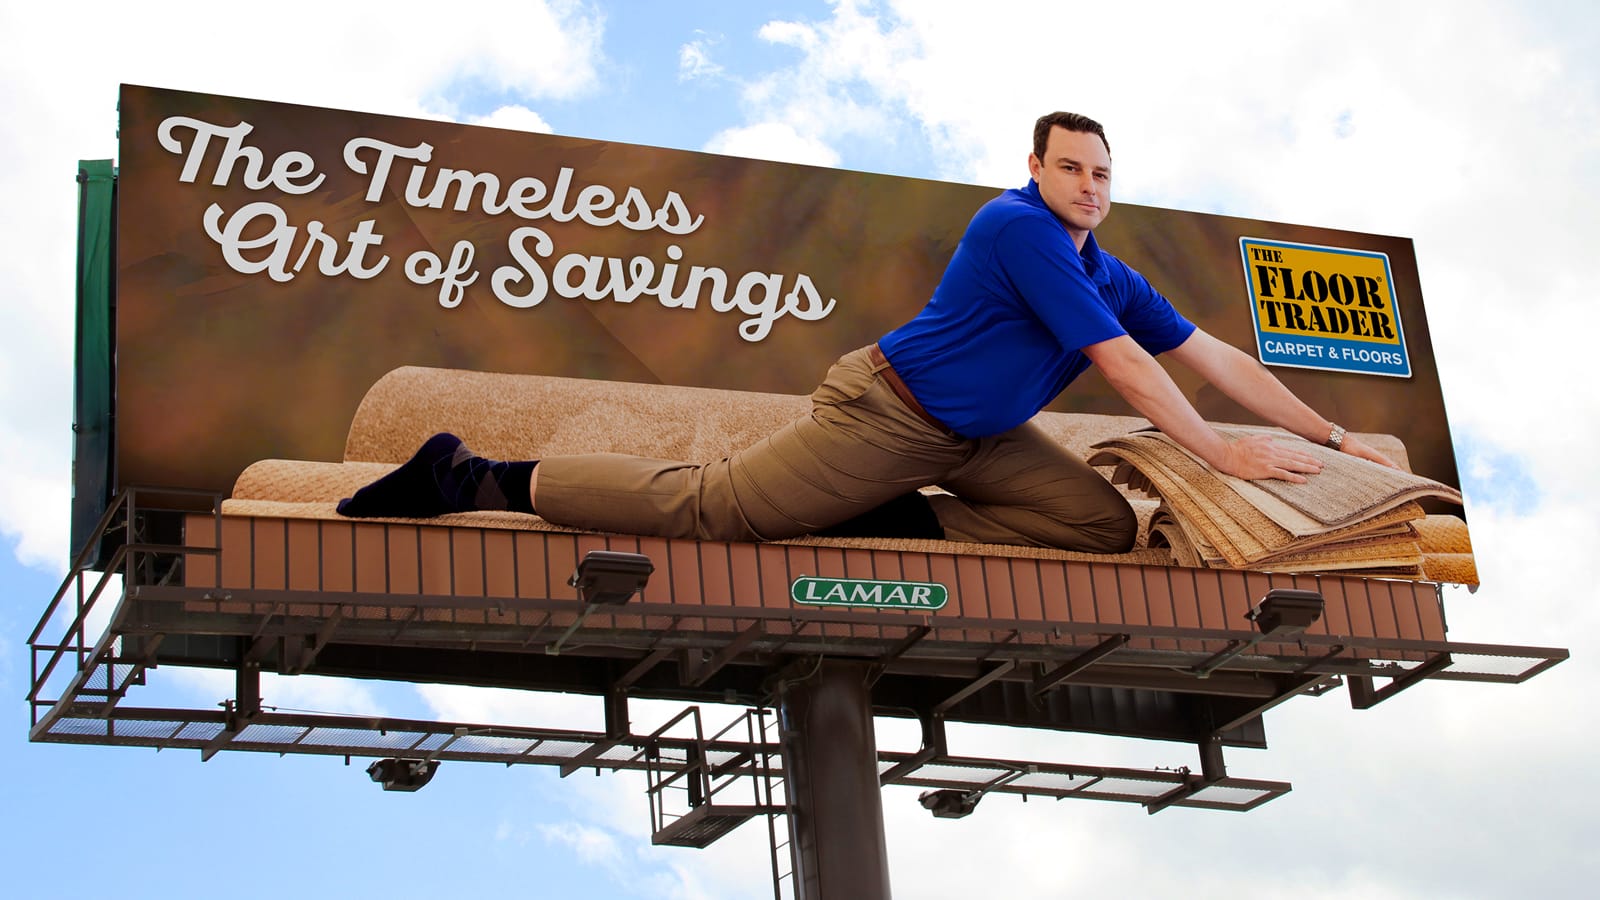 Seinfeld-inspired billboard advertisement for The Floor Trader went viral